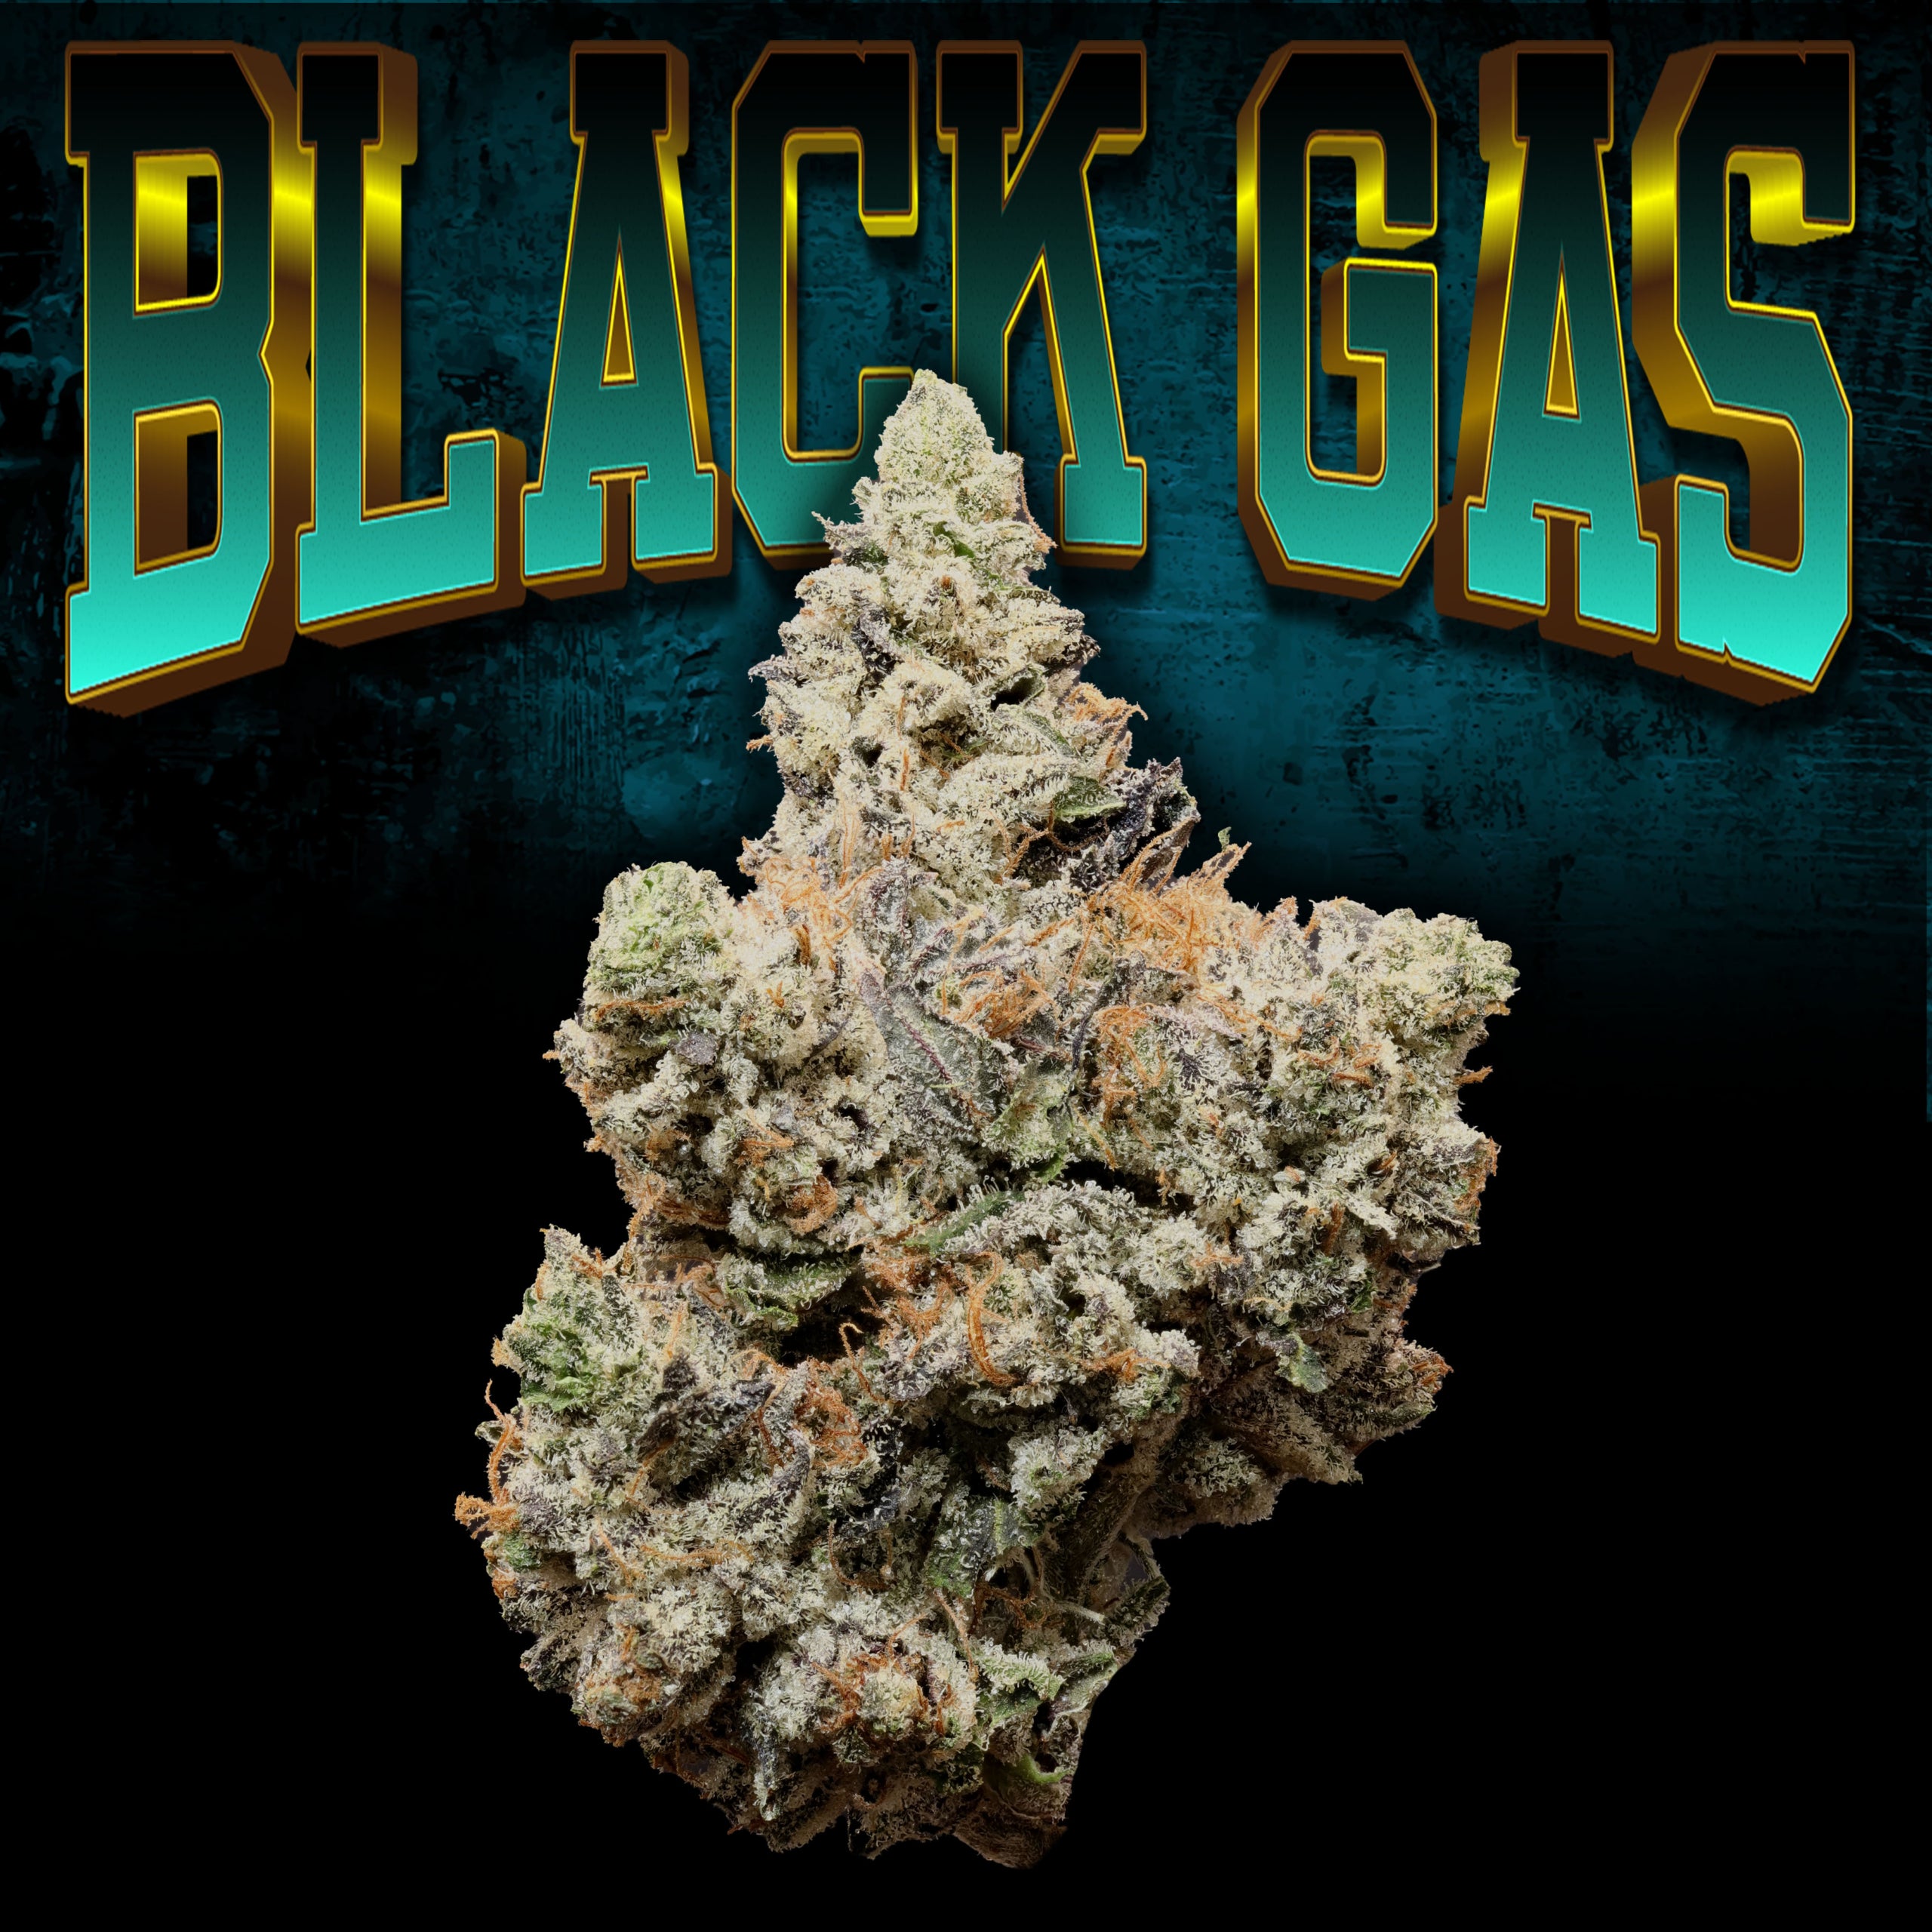 Black Gas Bud